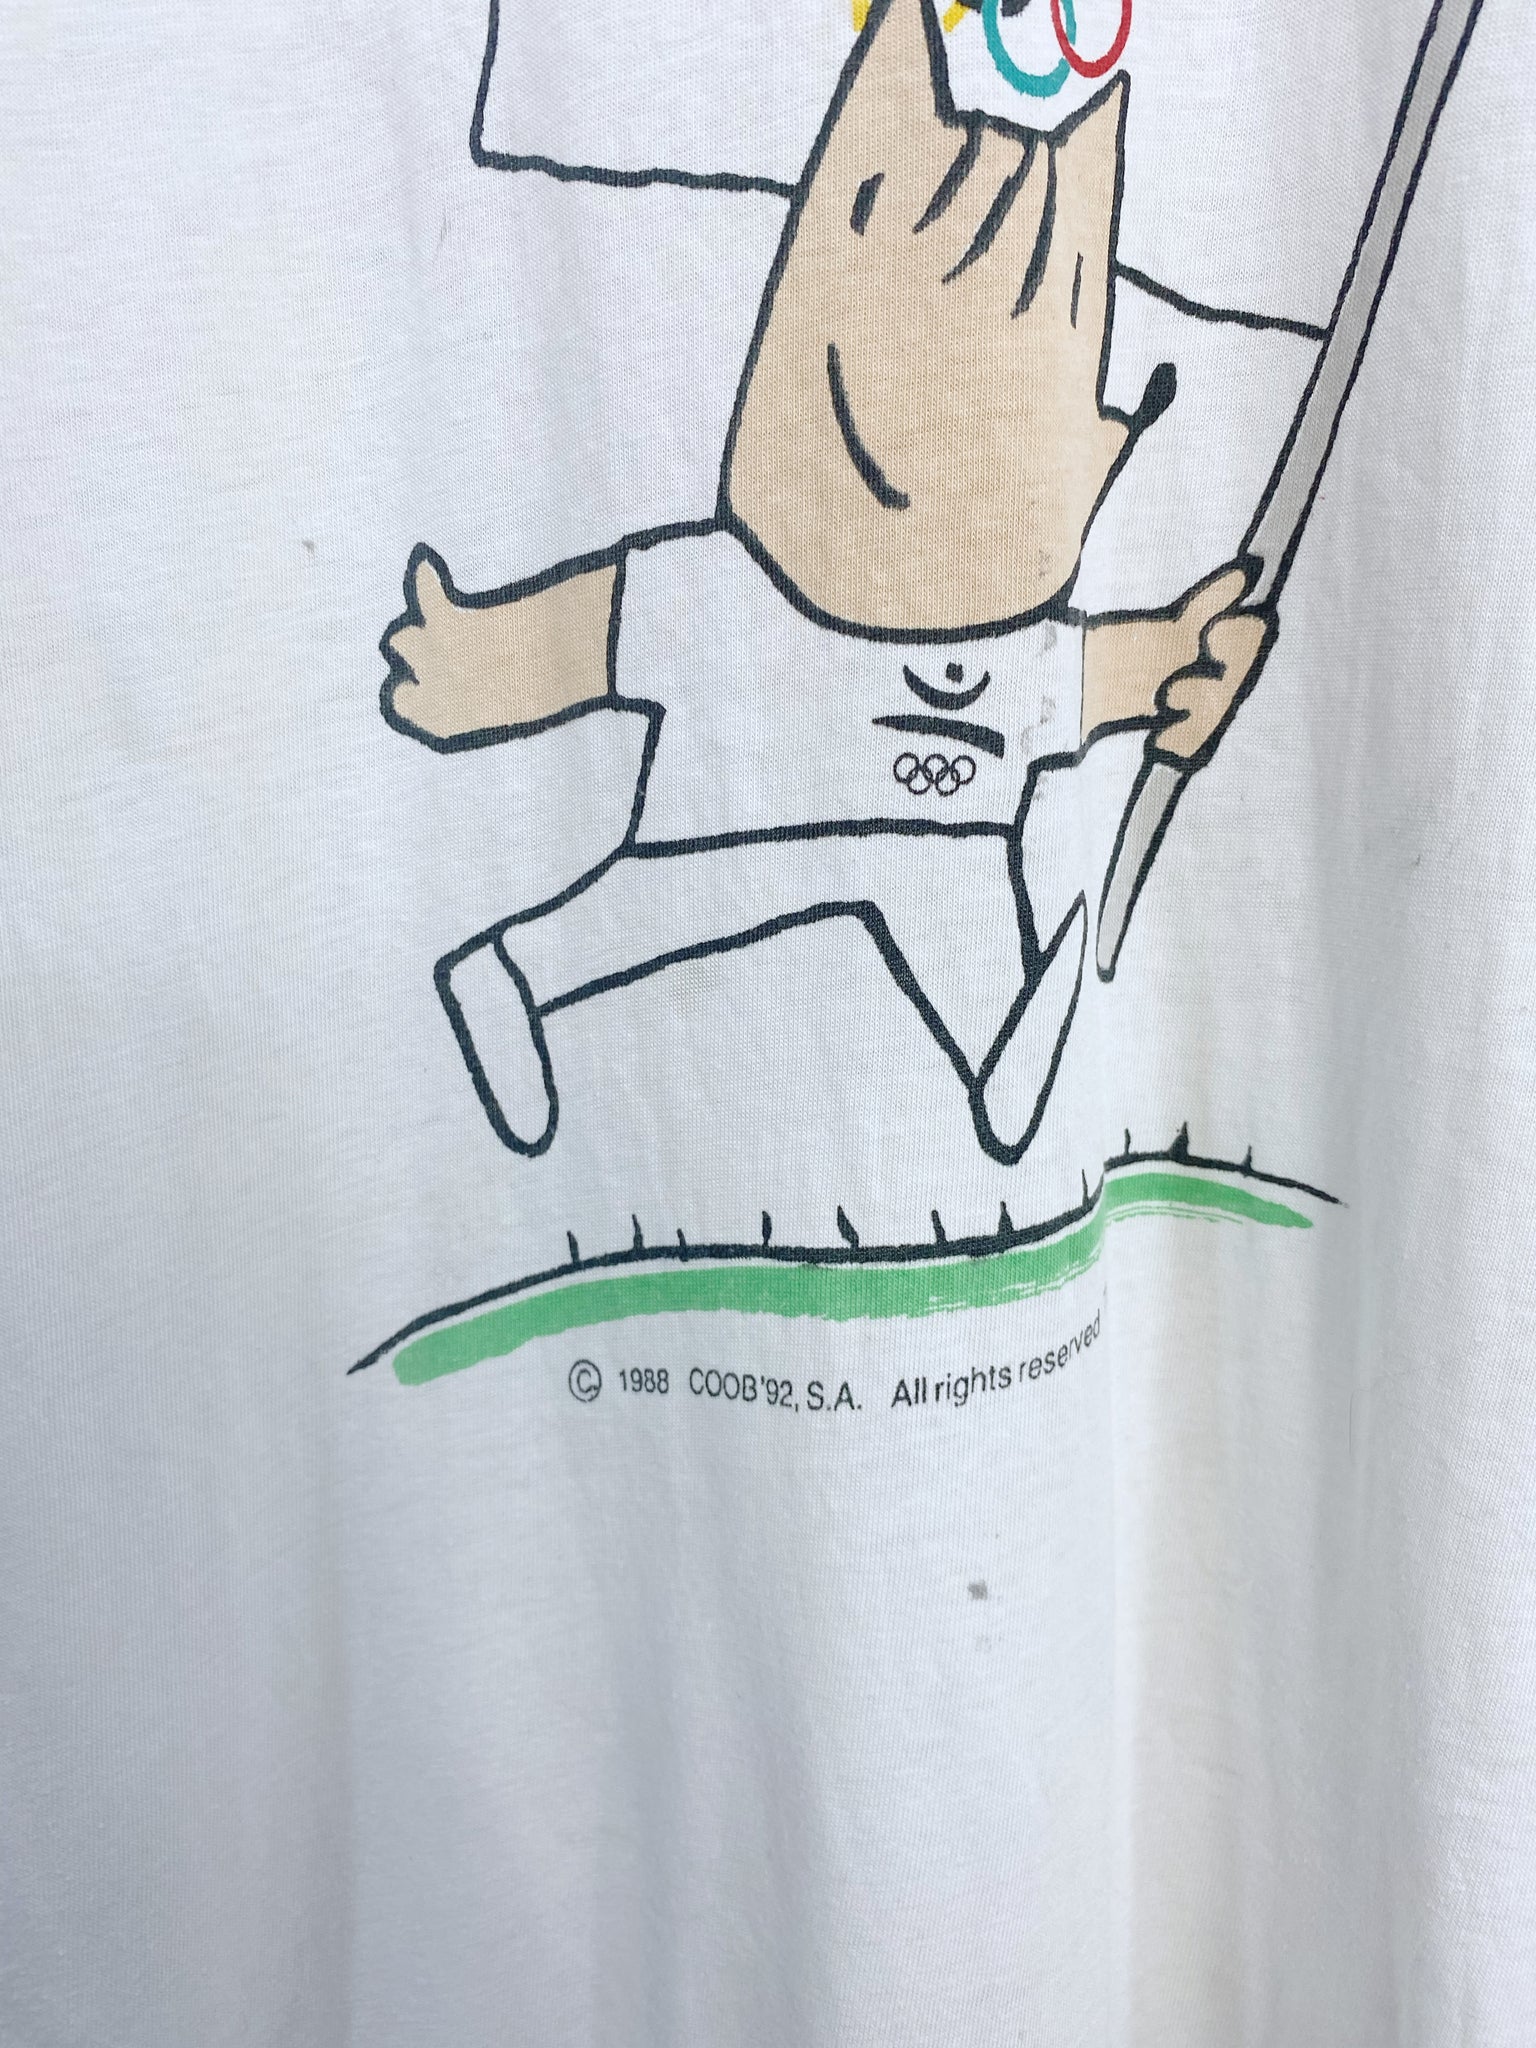 Vintage 1992 Barcelona Olympics T-shirt M